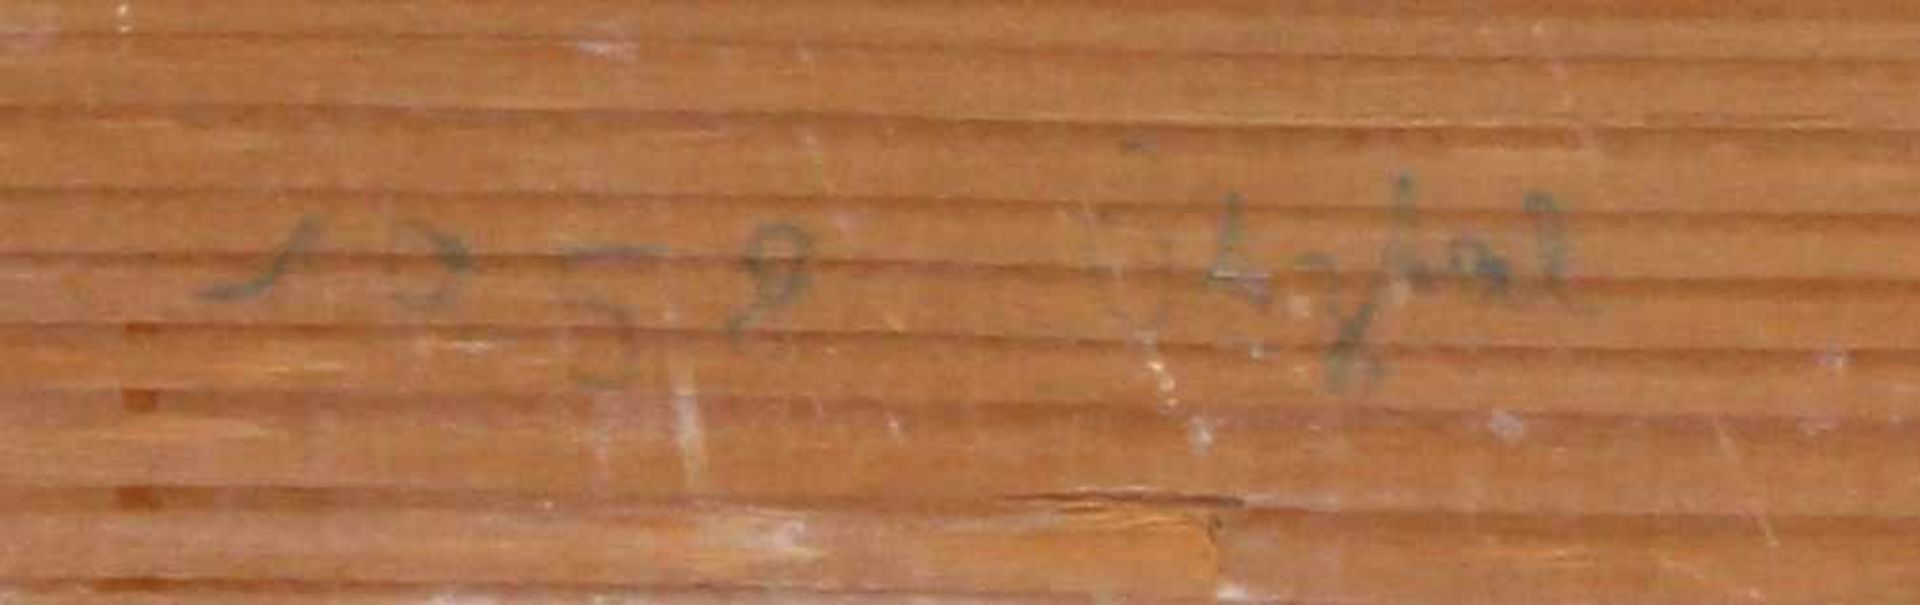 Voigt (20. Jh.), "Haus am Meer (Fehmarn ?)", Öl auf Leinwand, signiert unten rechts Voigt, 60 x 80 - Image 5 of 5